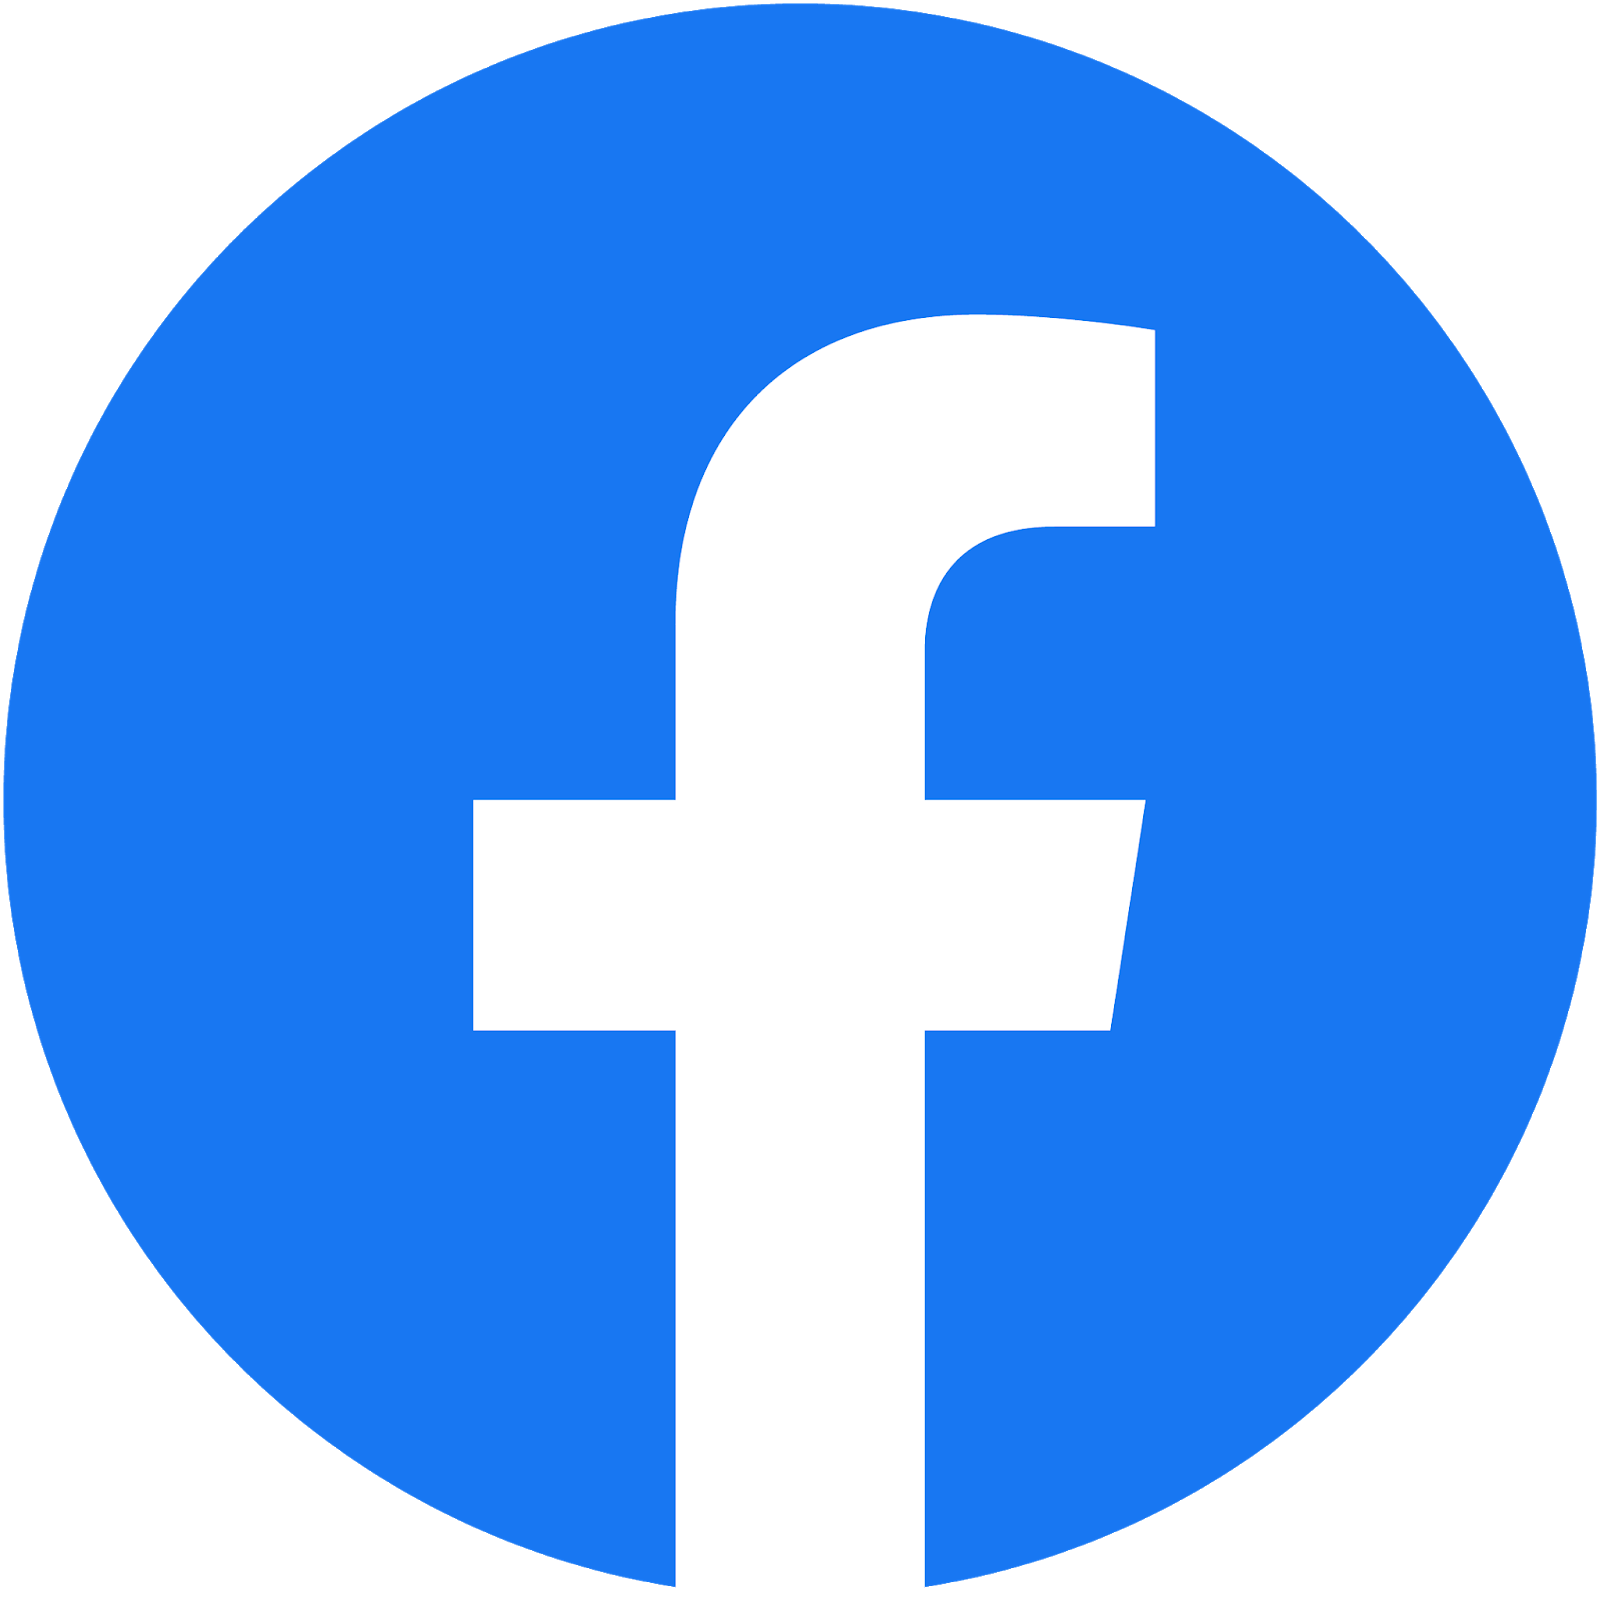 Facebook logo of white "f" on blue circle